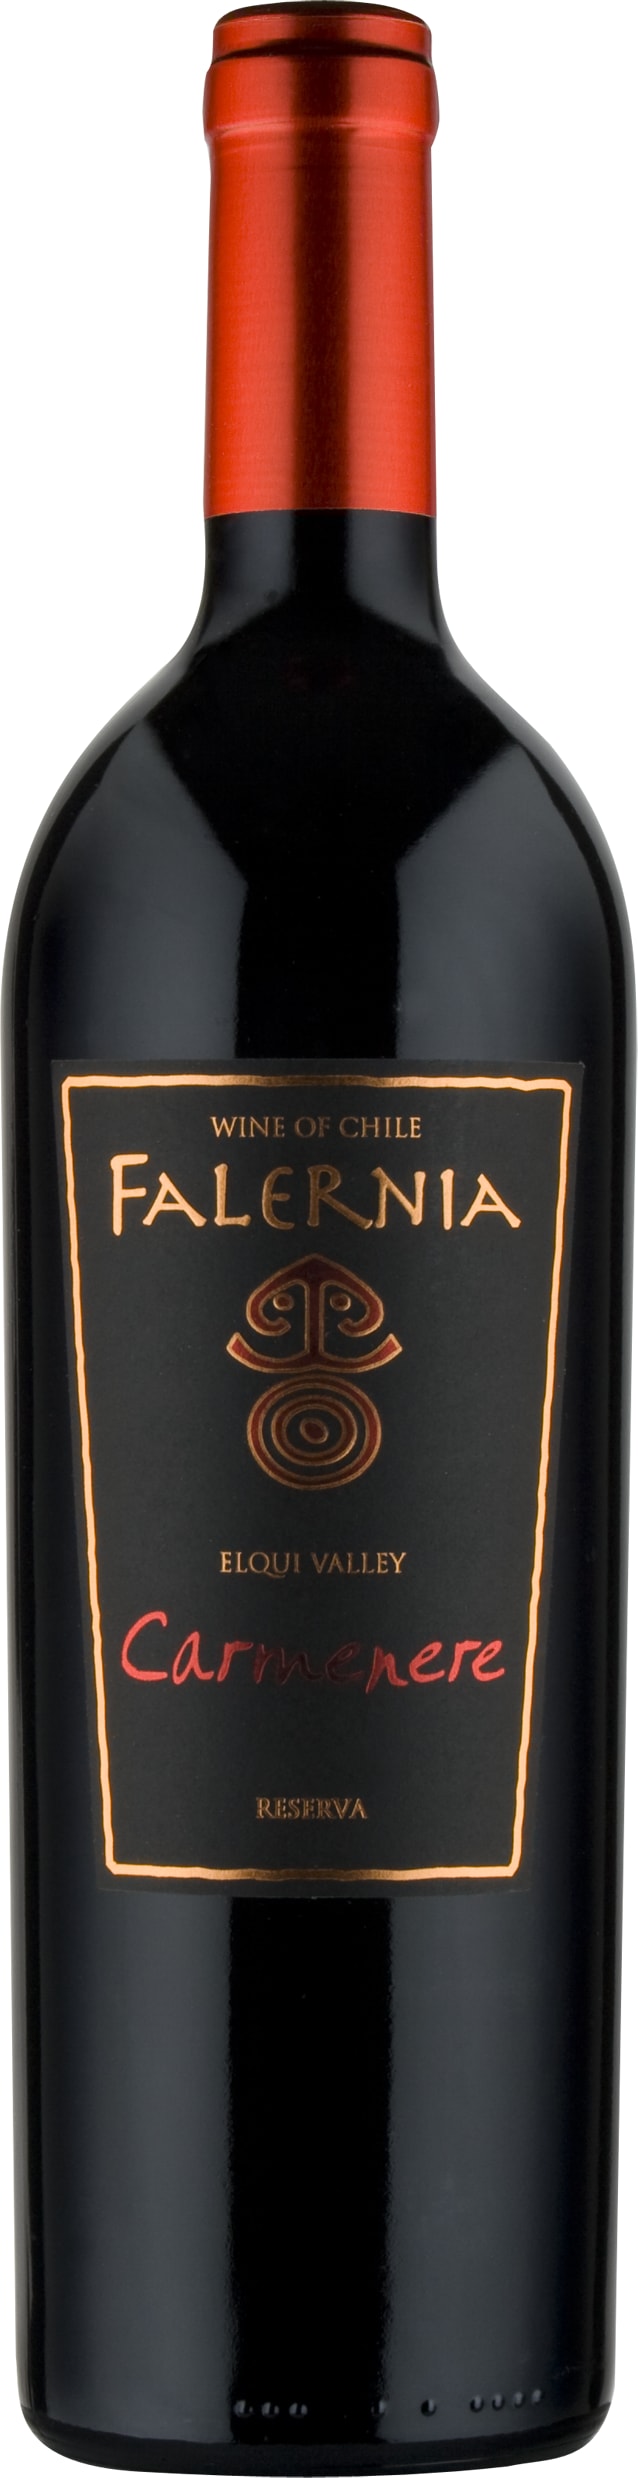 Vina Falernia Carmenere Gran Reserva 2020 75cl - Buy Vina Falernia Wines from GREAT WINES DIRECT wine shop